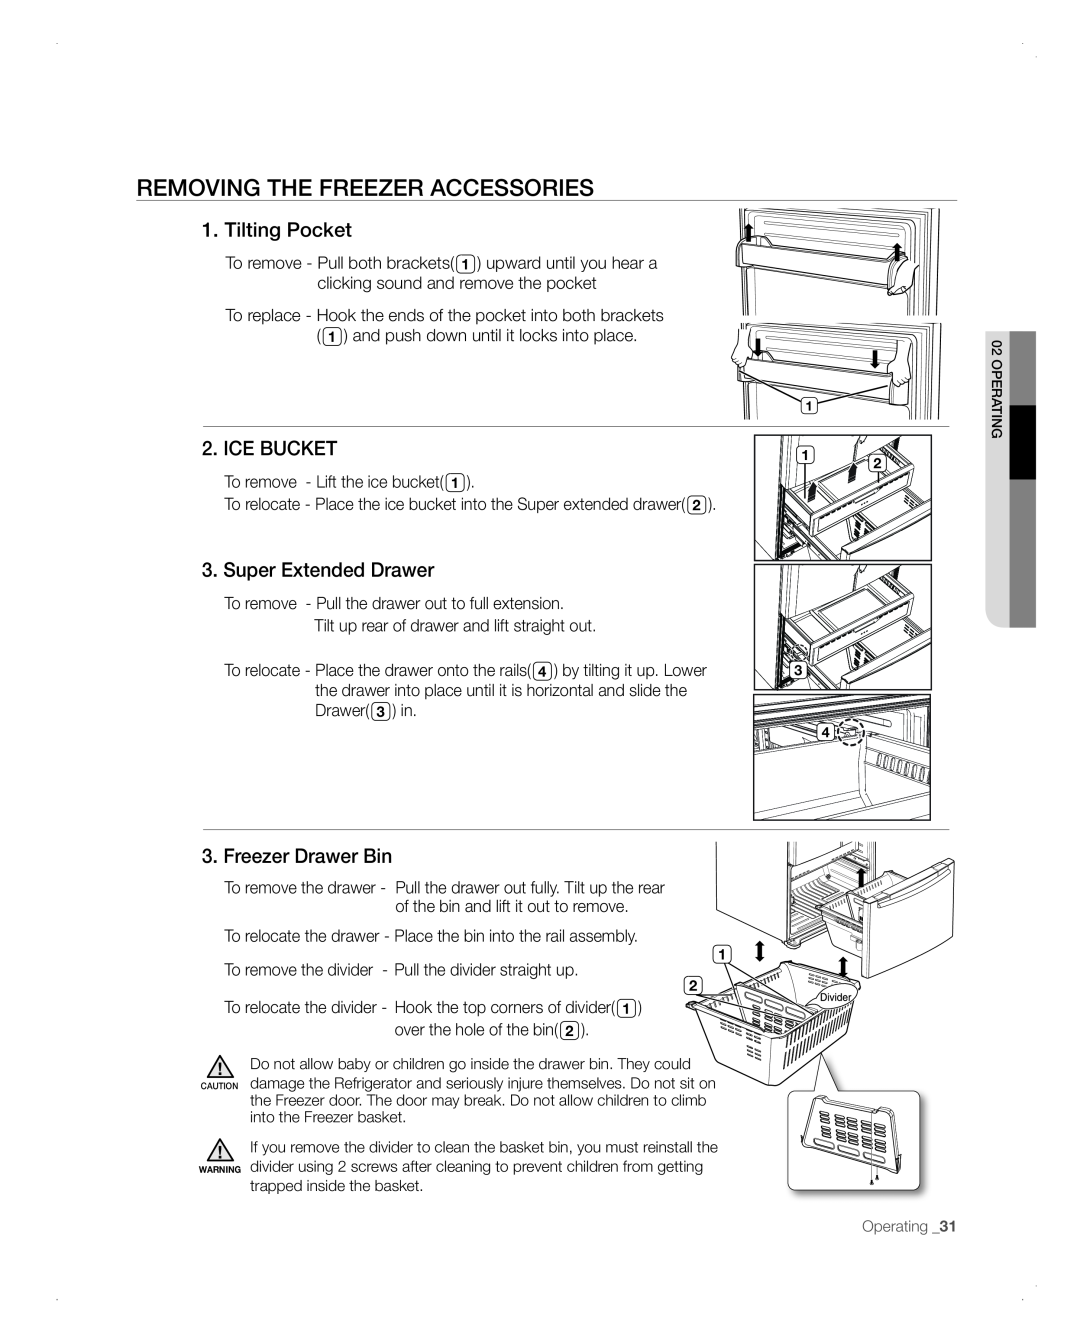 Samsung RFG298AARS Removing The Freezer Accessories, Tilting Pocket, Ice Bucket, Super Extended Drawer, Freezer Drawer Bin 